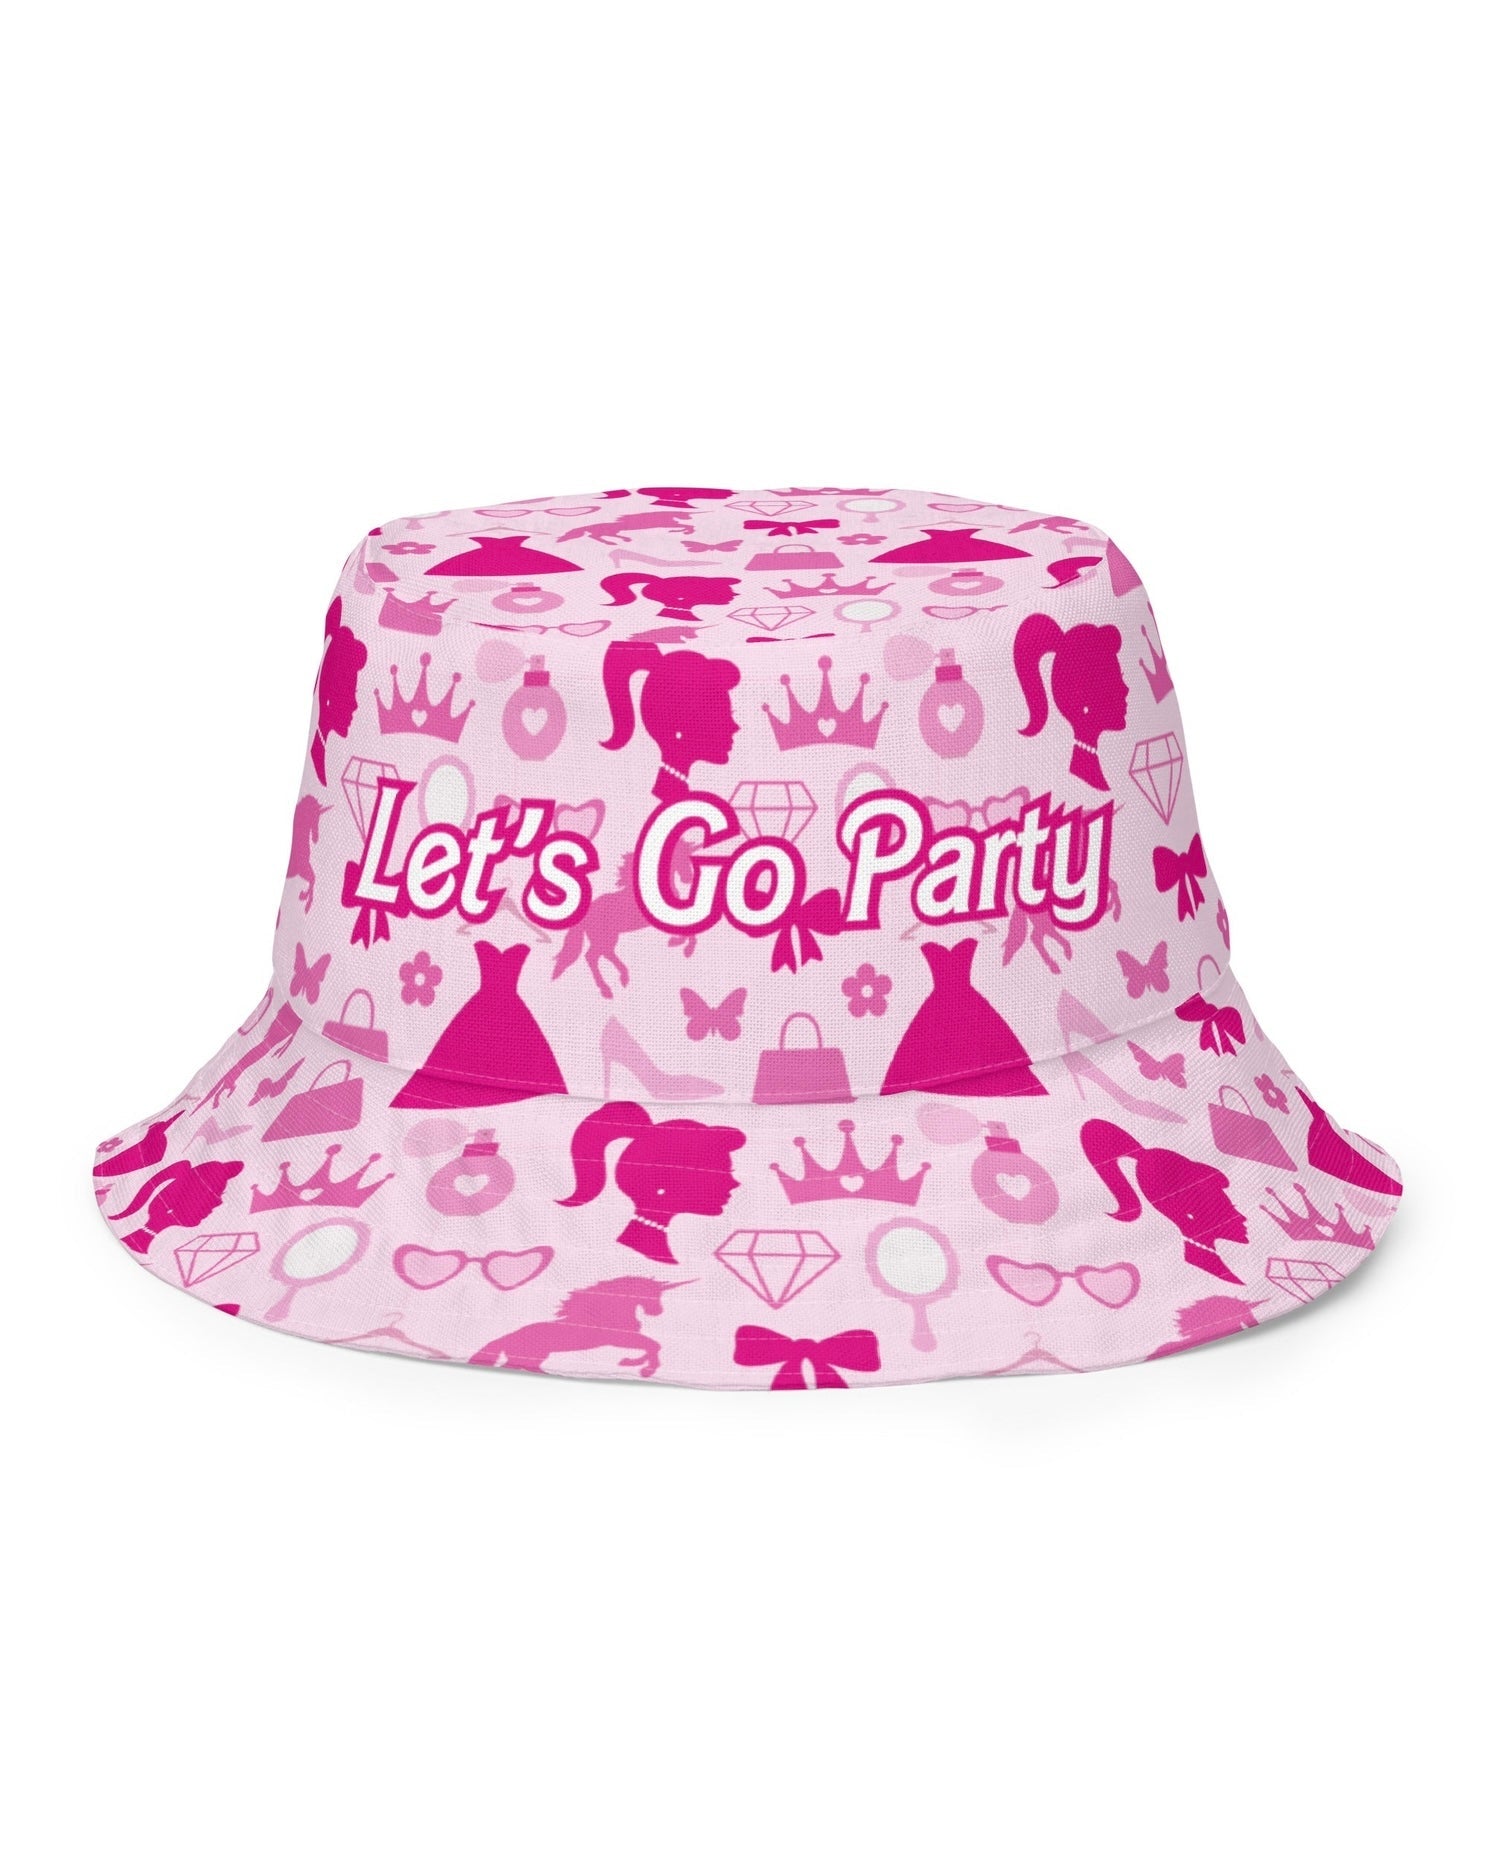 Let's Go Party Reversible Bucket Hat